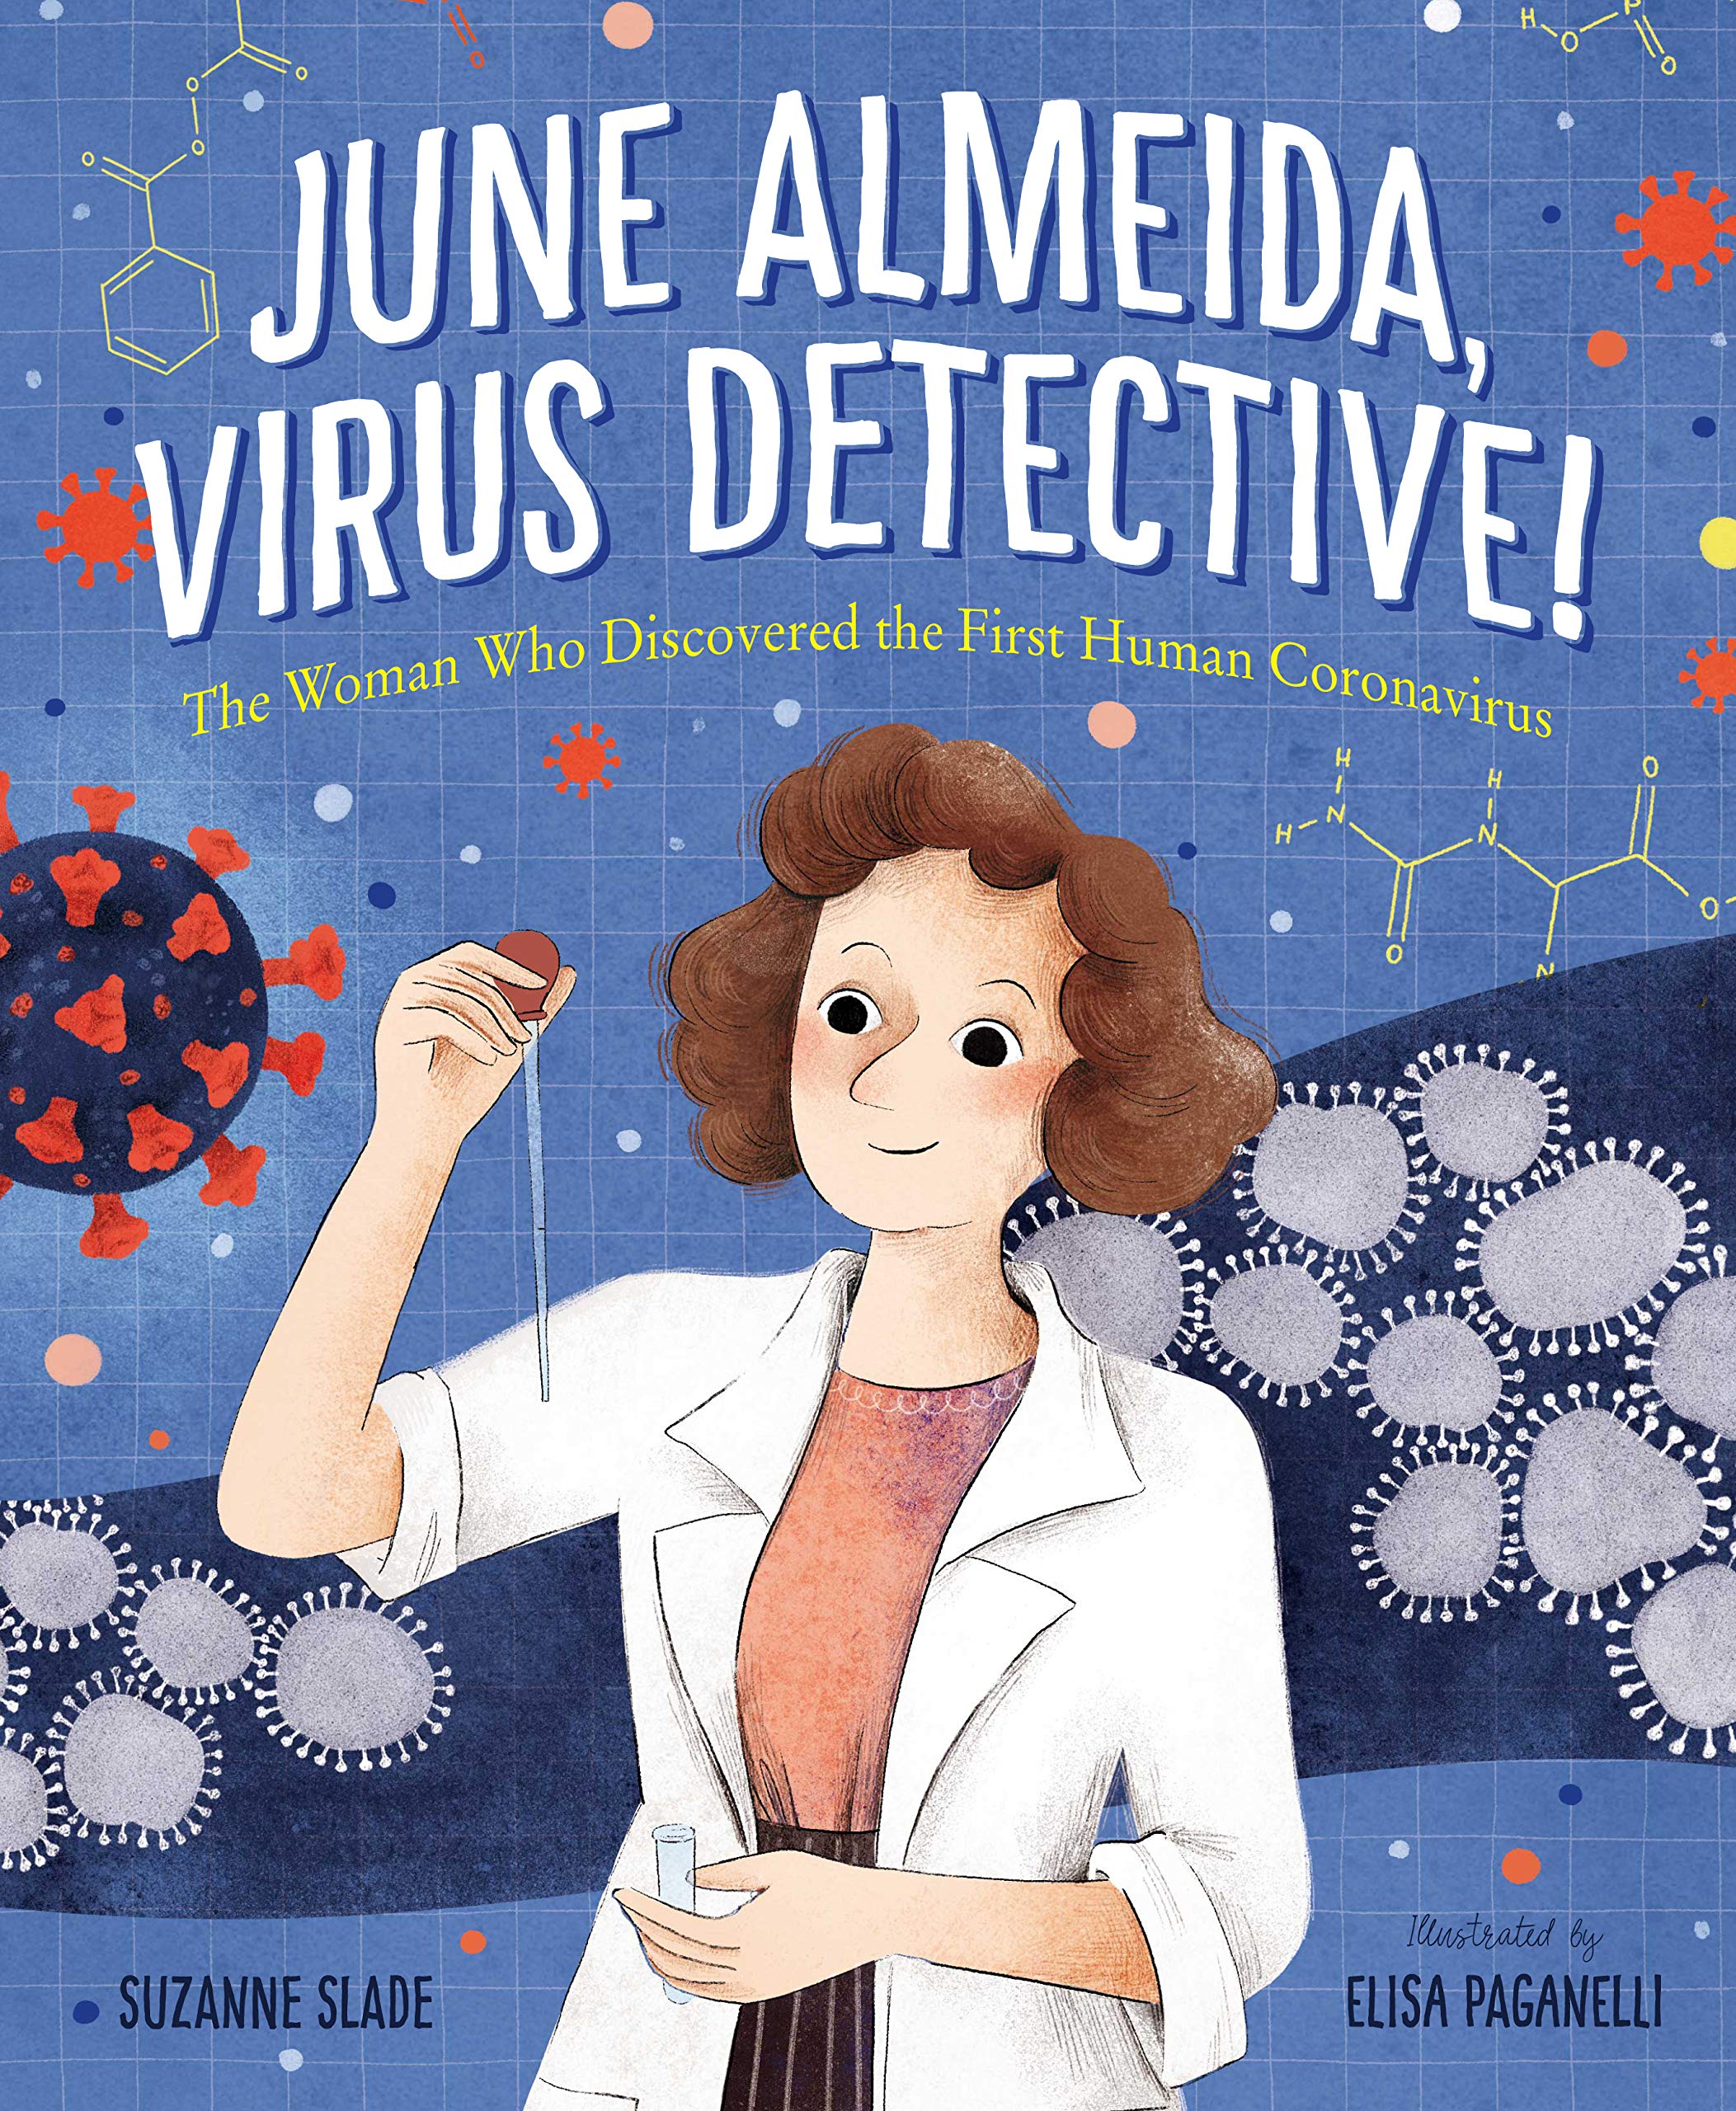 June Almeida, Virus Detective! The Woman Who Discovered the First Human Coronavirus